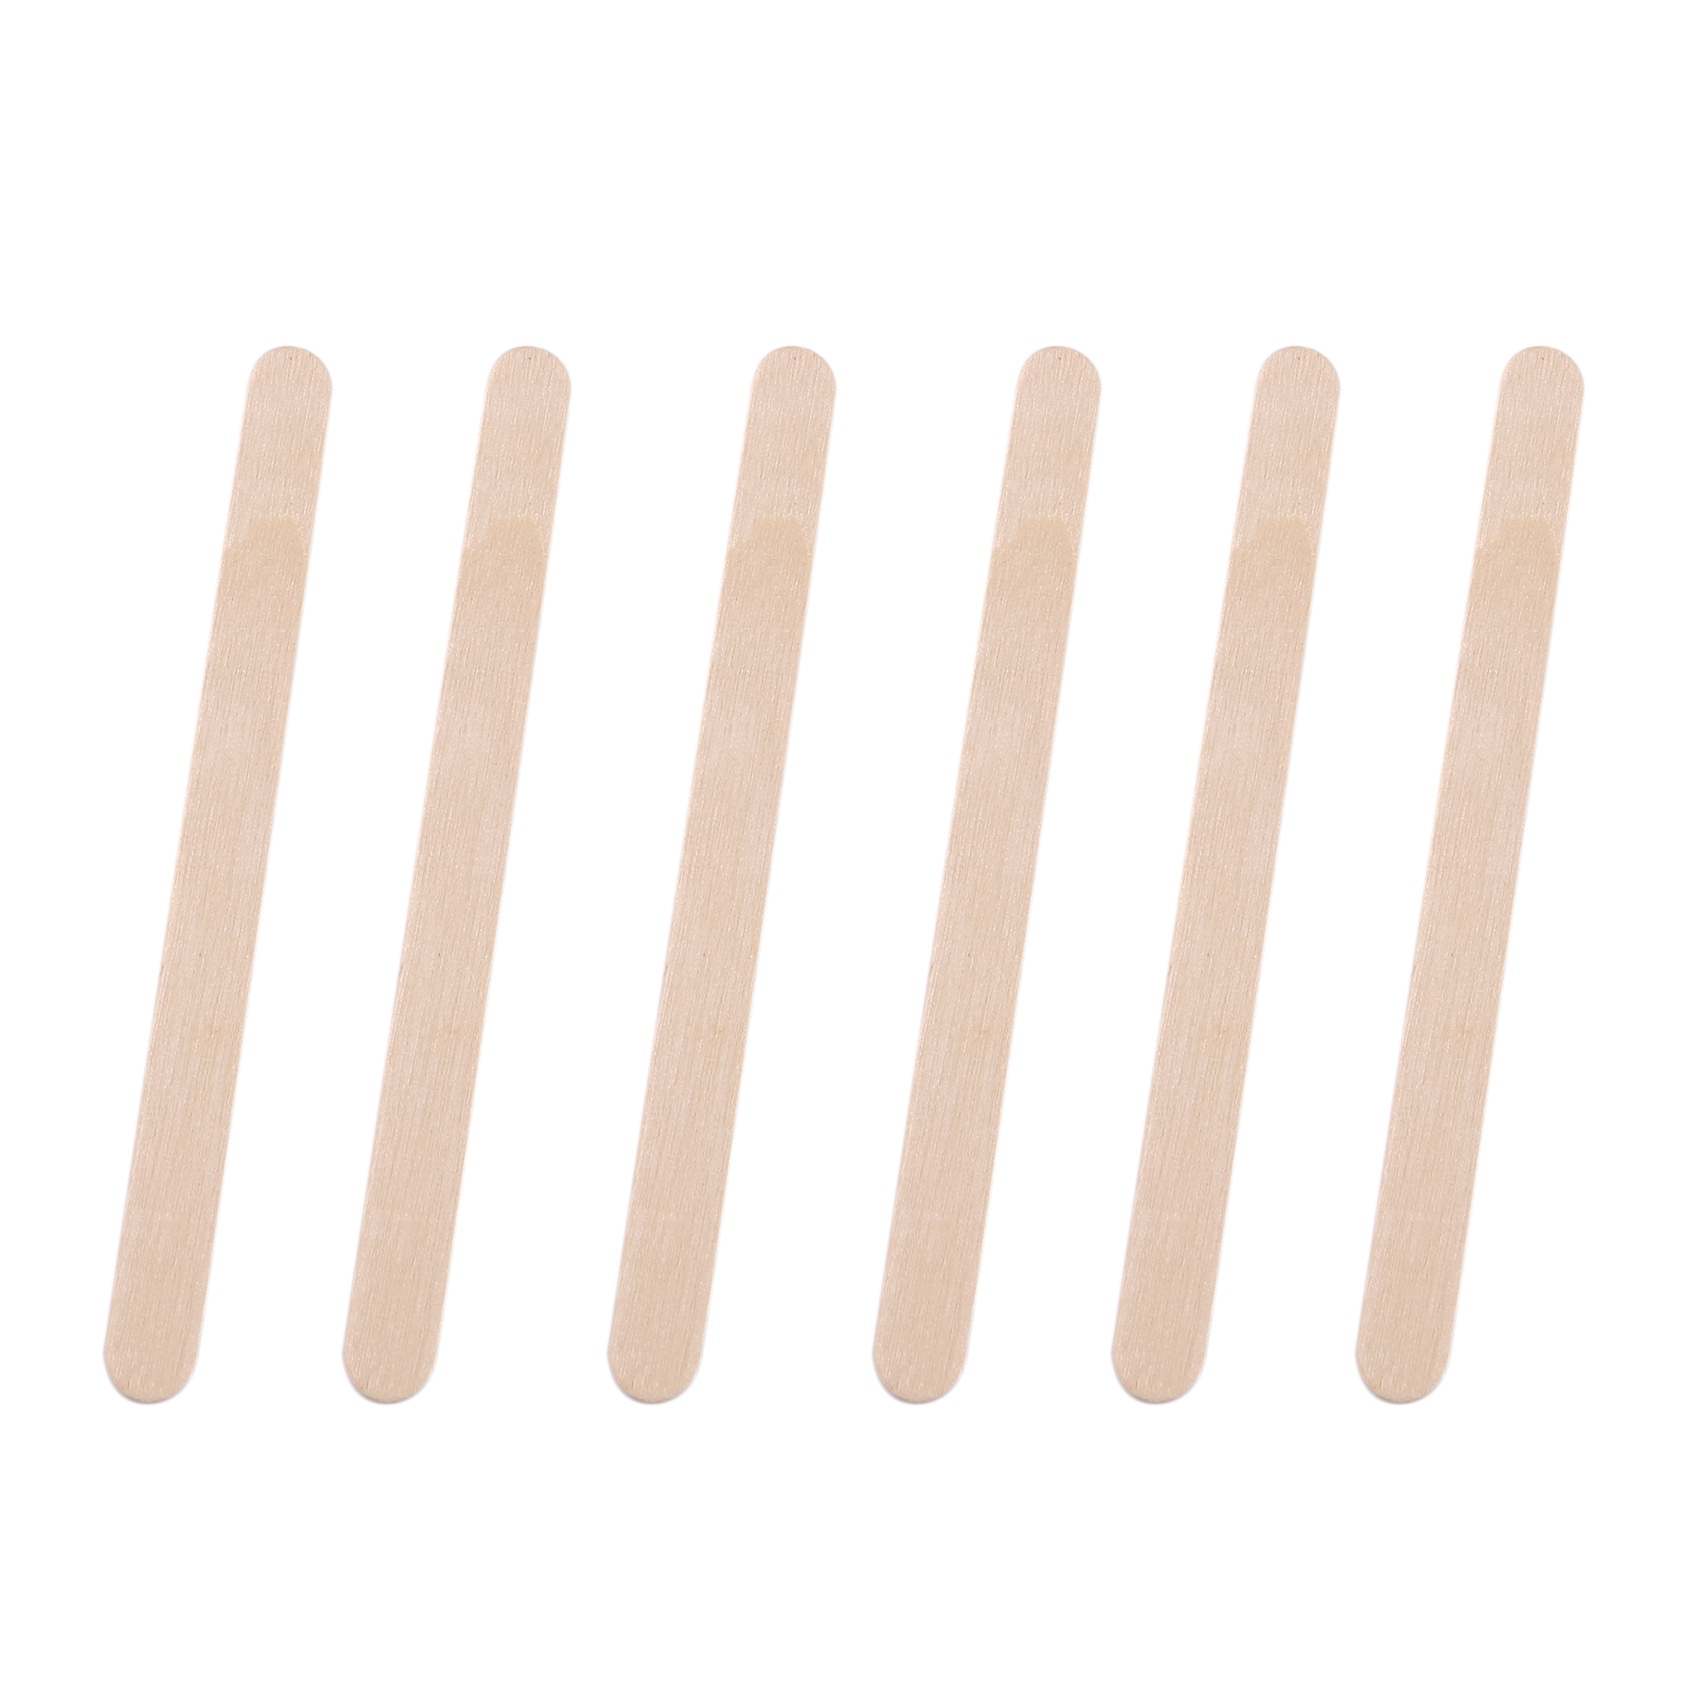 200 Pcs Craft Sticks Ice Cream Sticks Wooden Popsicle Sticks 114MM Length Treat Sticks Ice Sticks - image 3 of 5